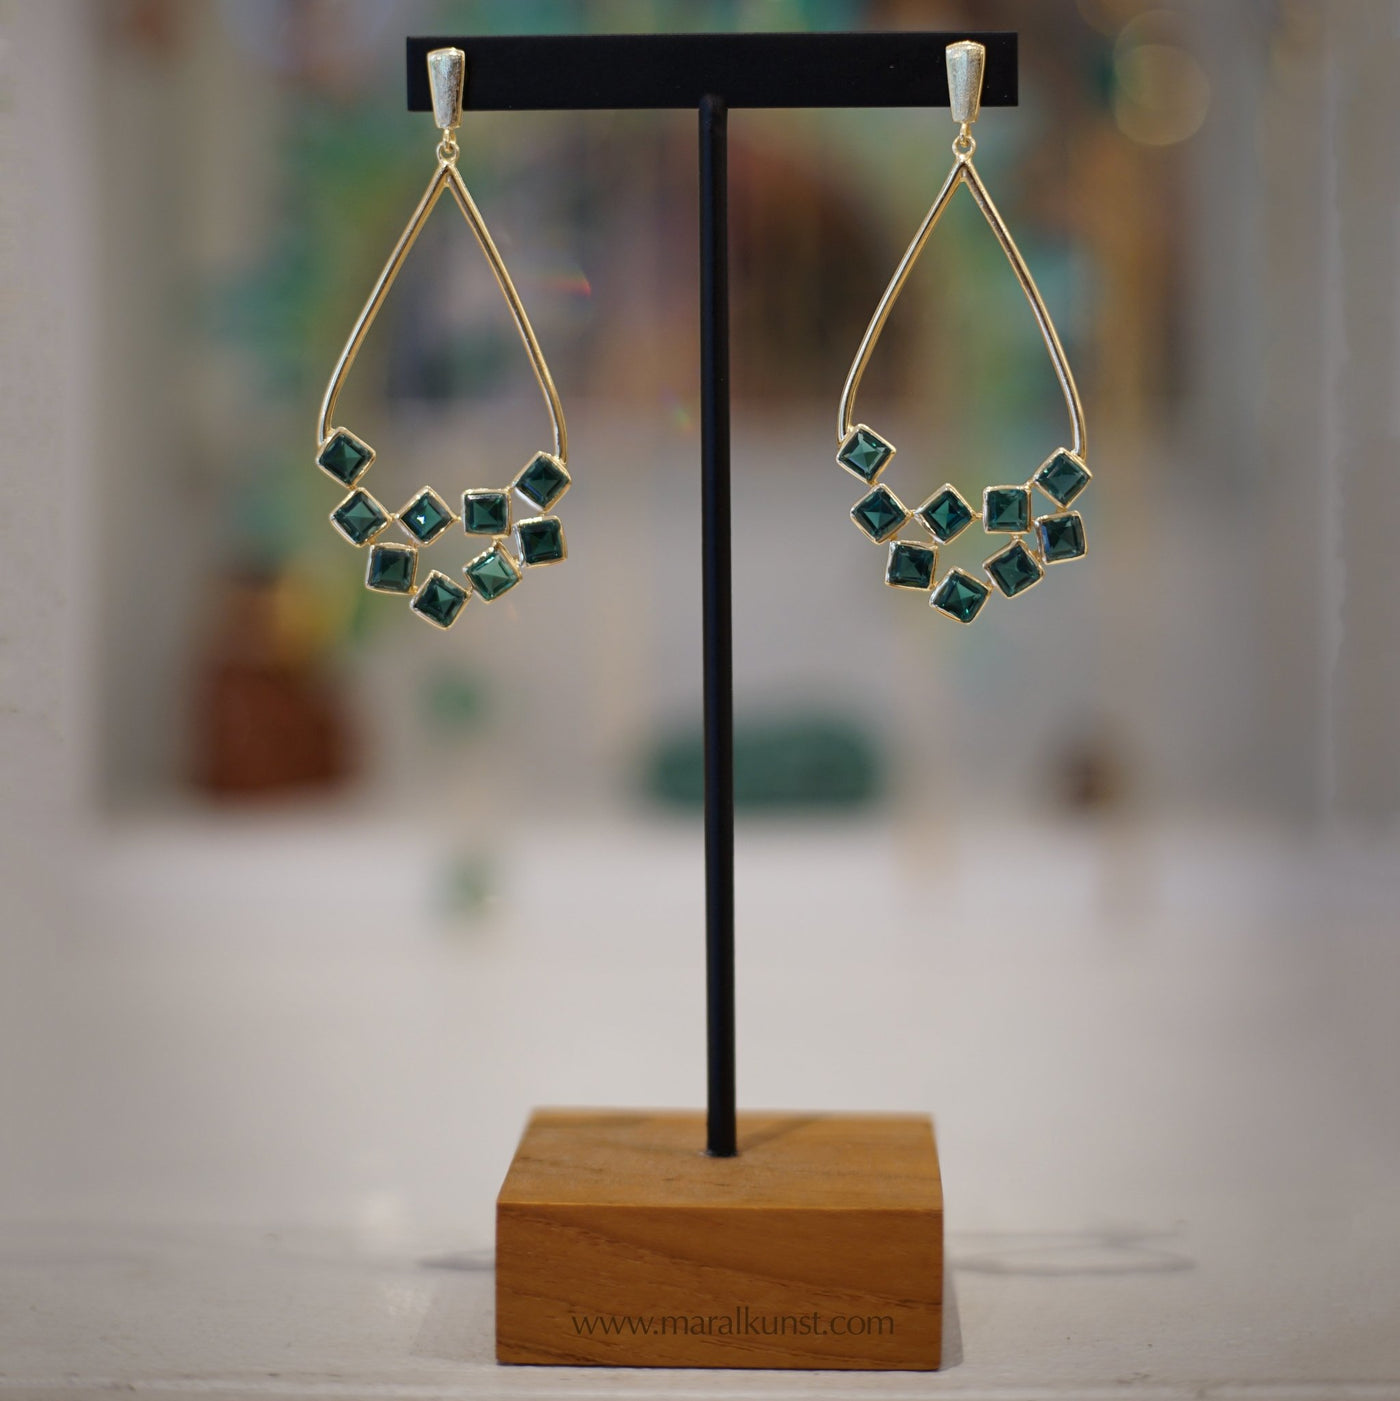 Synthetic Green Tourmaline earrings - Maral Kunst Jewelry